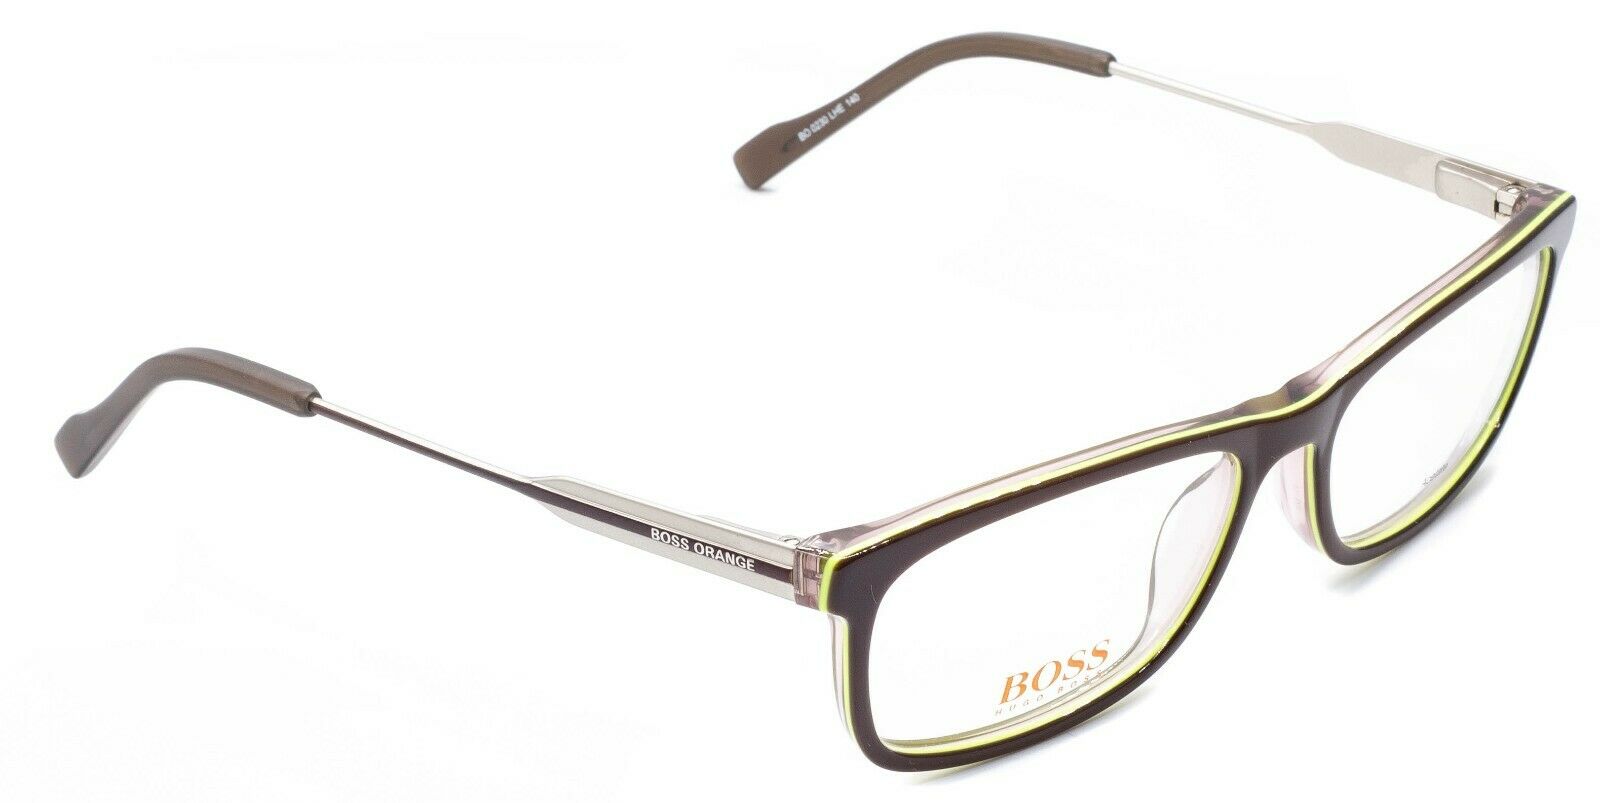 BOSS ORANGE BO 0230 LHE 55mm Eyewear FRAMES RX Optical Glasses Eyeglasses - New